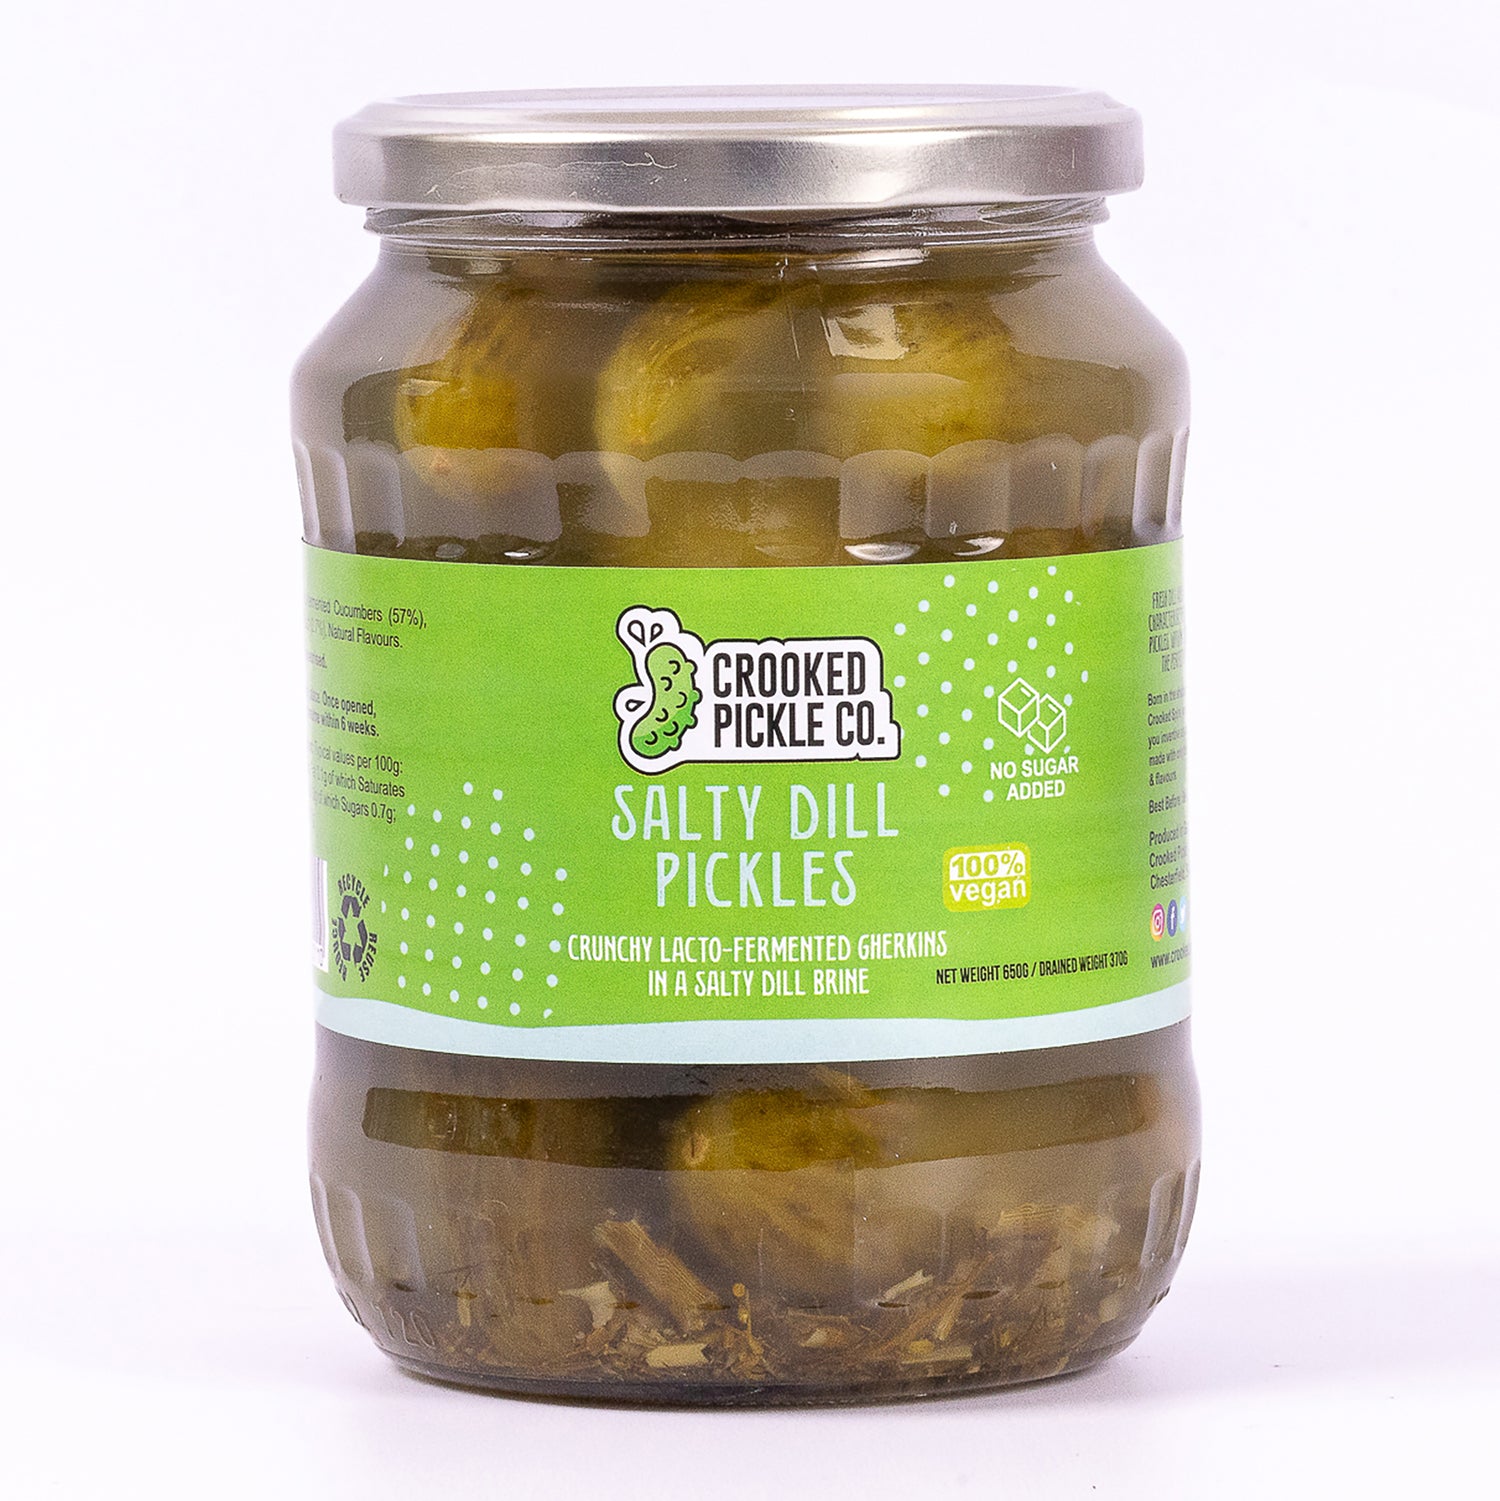 Sugar free dill pickles in a jar sold in the UK. Kosher dills in a salt brine.